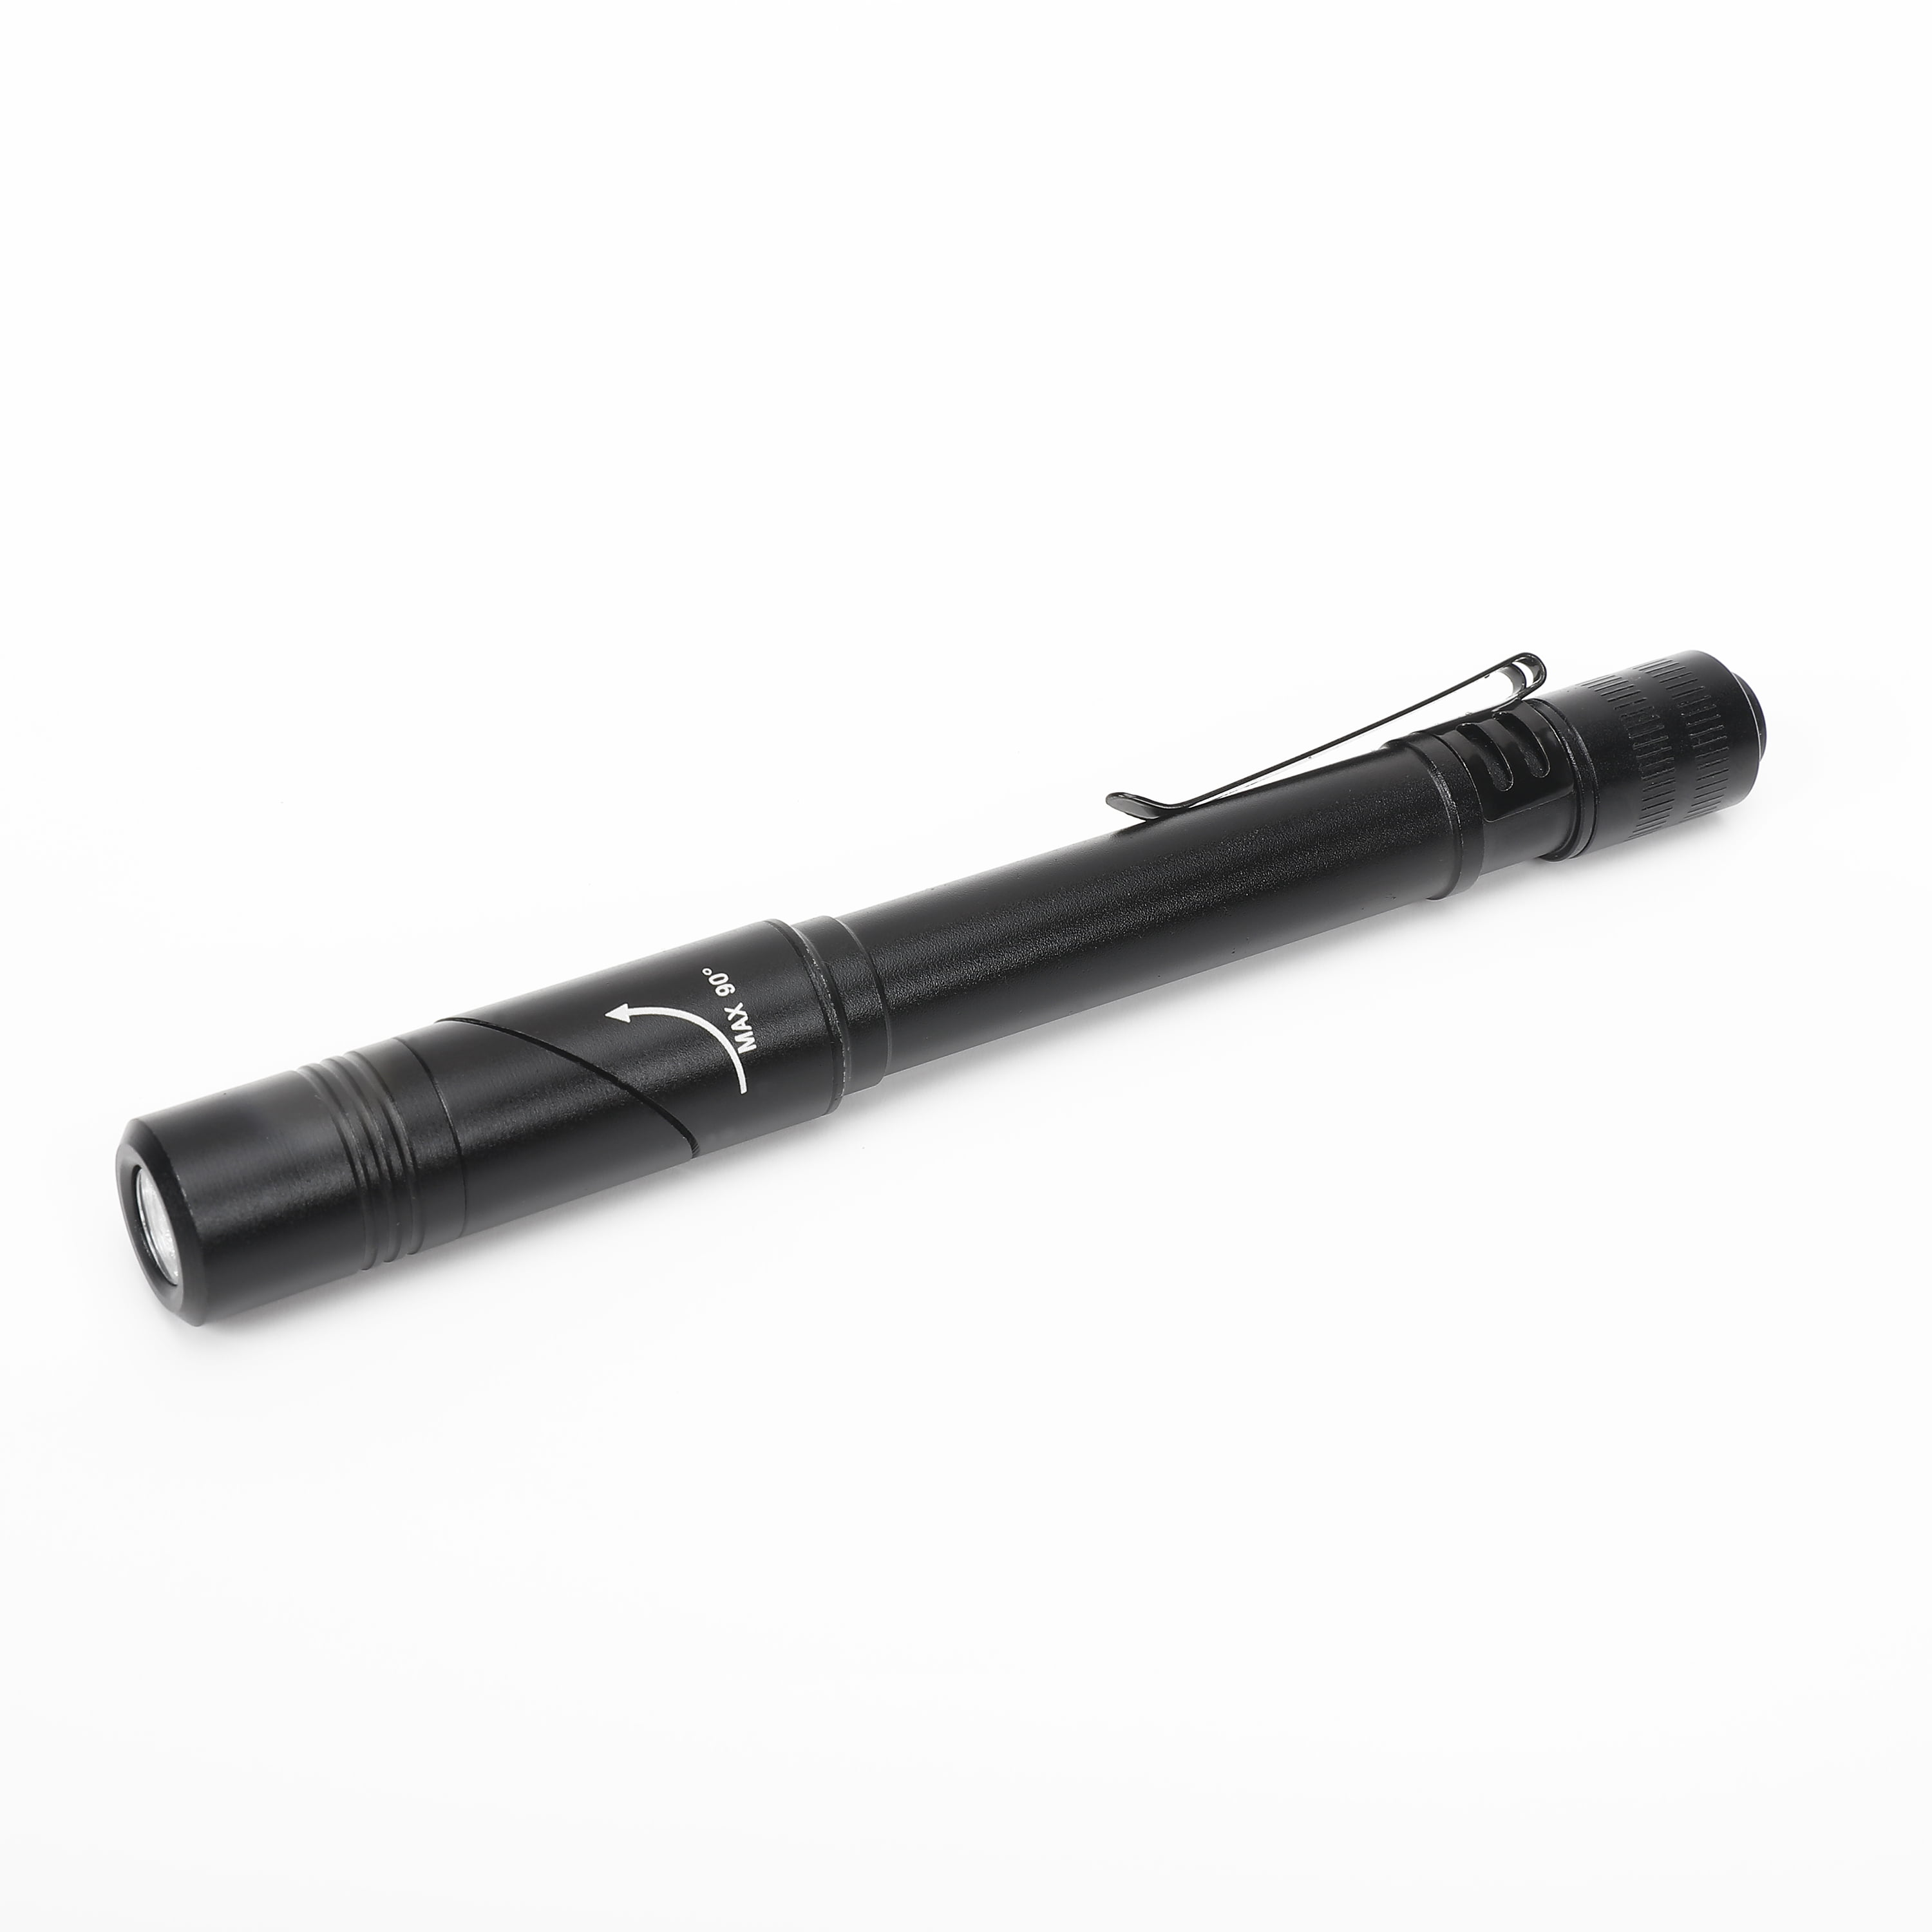 Aluminum Body Black Hyper Tough Swivel Head Led Pen Light With Pocket Clip 